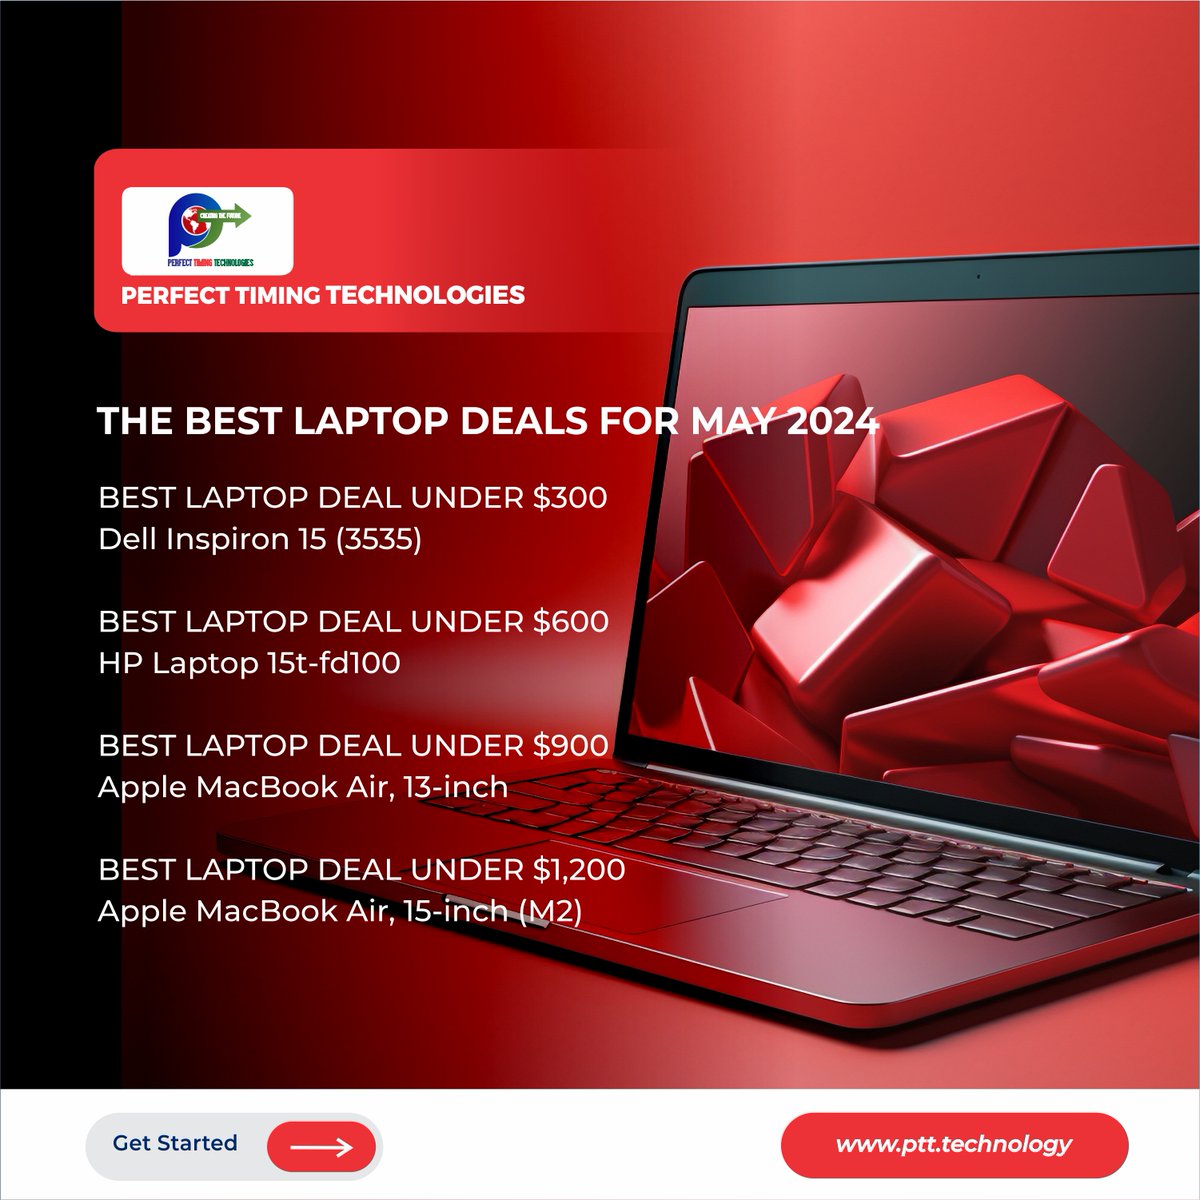 The best laptop deals for May 2024

Read Here: mashable.com/article/best-l…

#PerfectTimingHolding #PerfectTimingTechnologies #LaptopDeals #TechSavings #Discounts #TechDeals #MayDeals #TechBargains #GadgetSavings #TechShopping #DealHunting #TechSales #ElectronicDeals #ShoppingSavvy